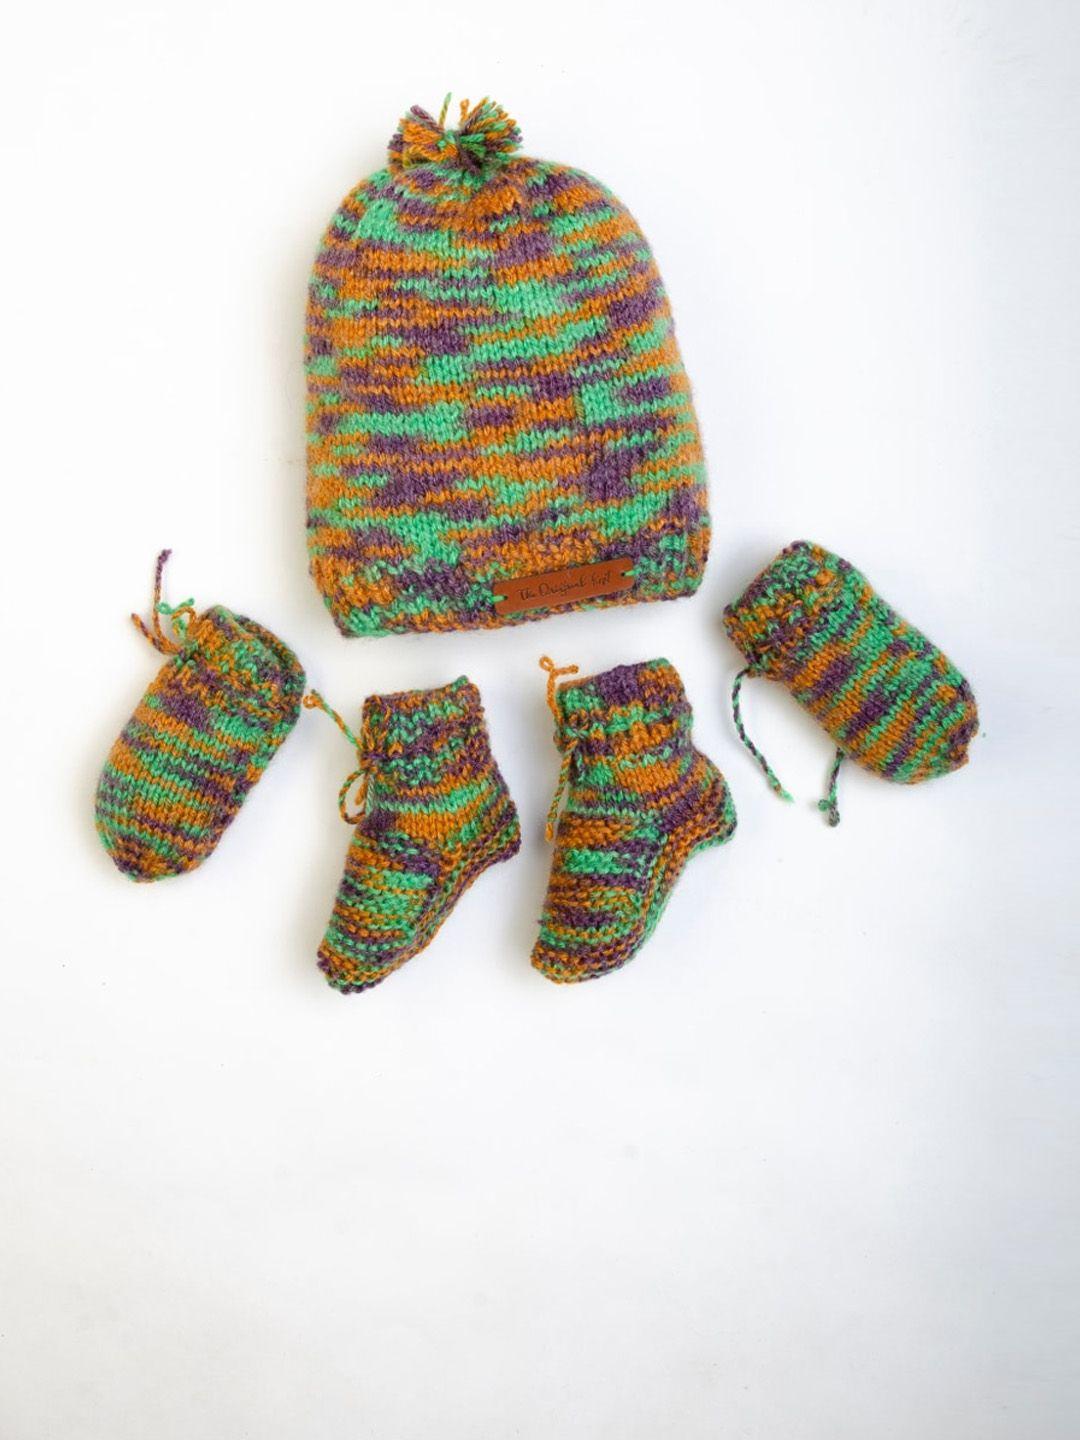 the original knit unisex kids green & purple printed beanie with mittens & socks